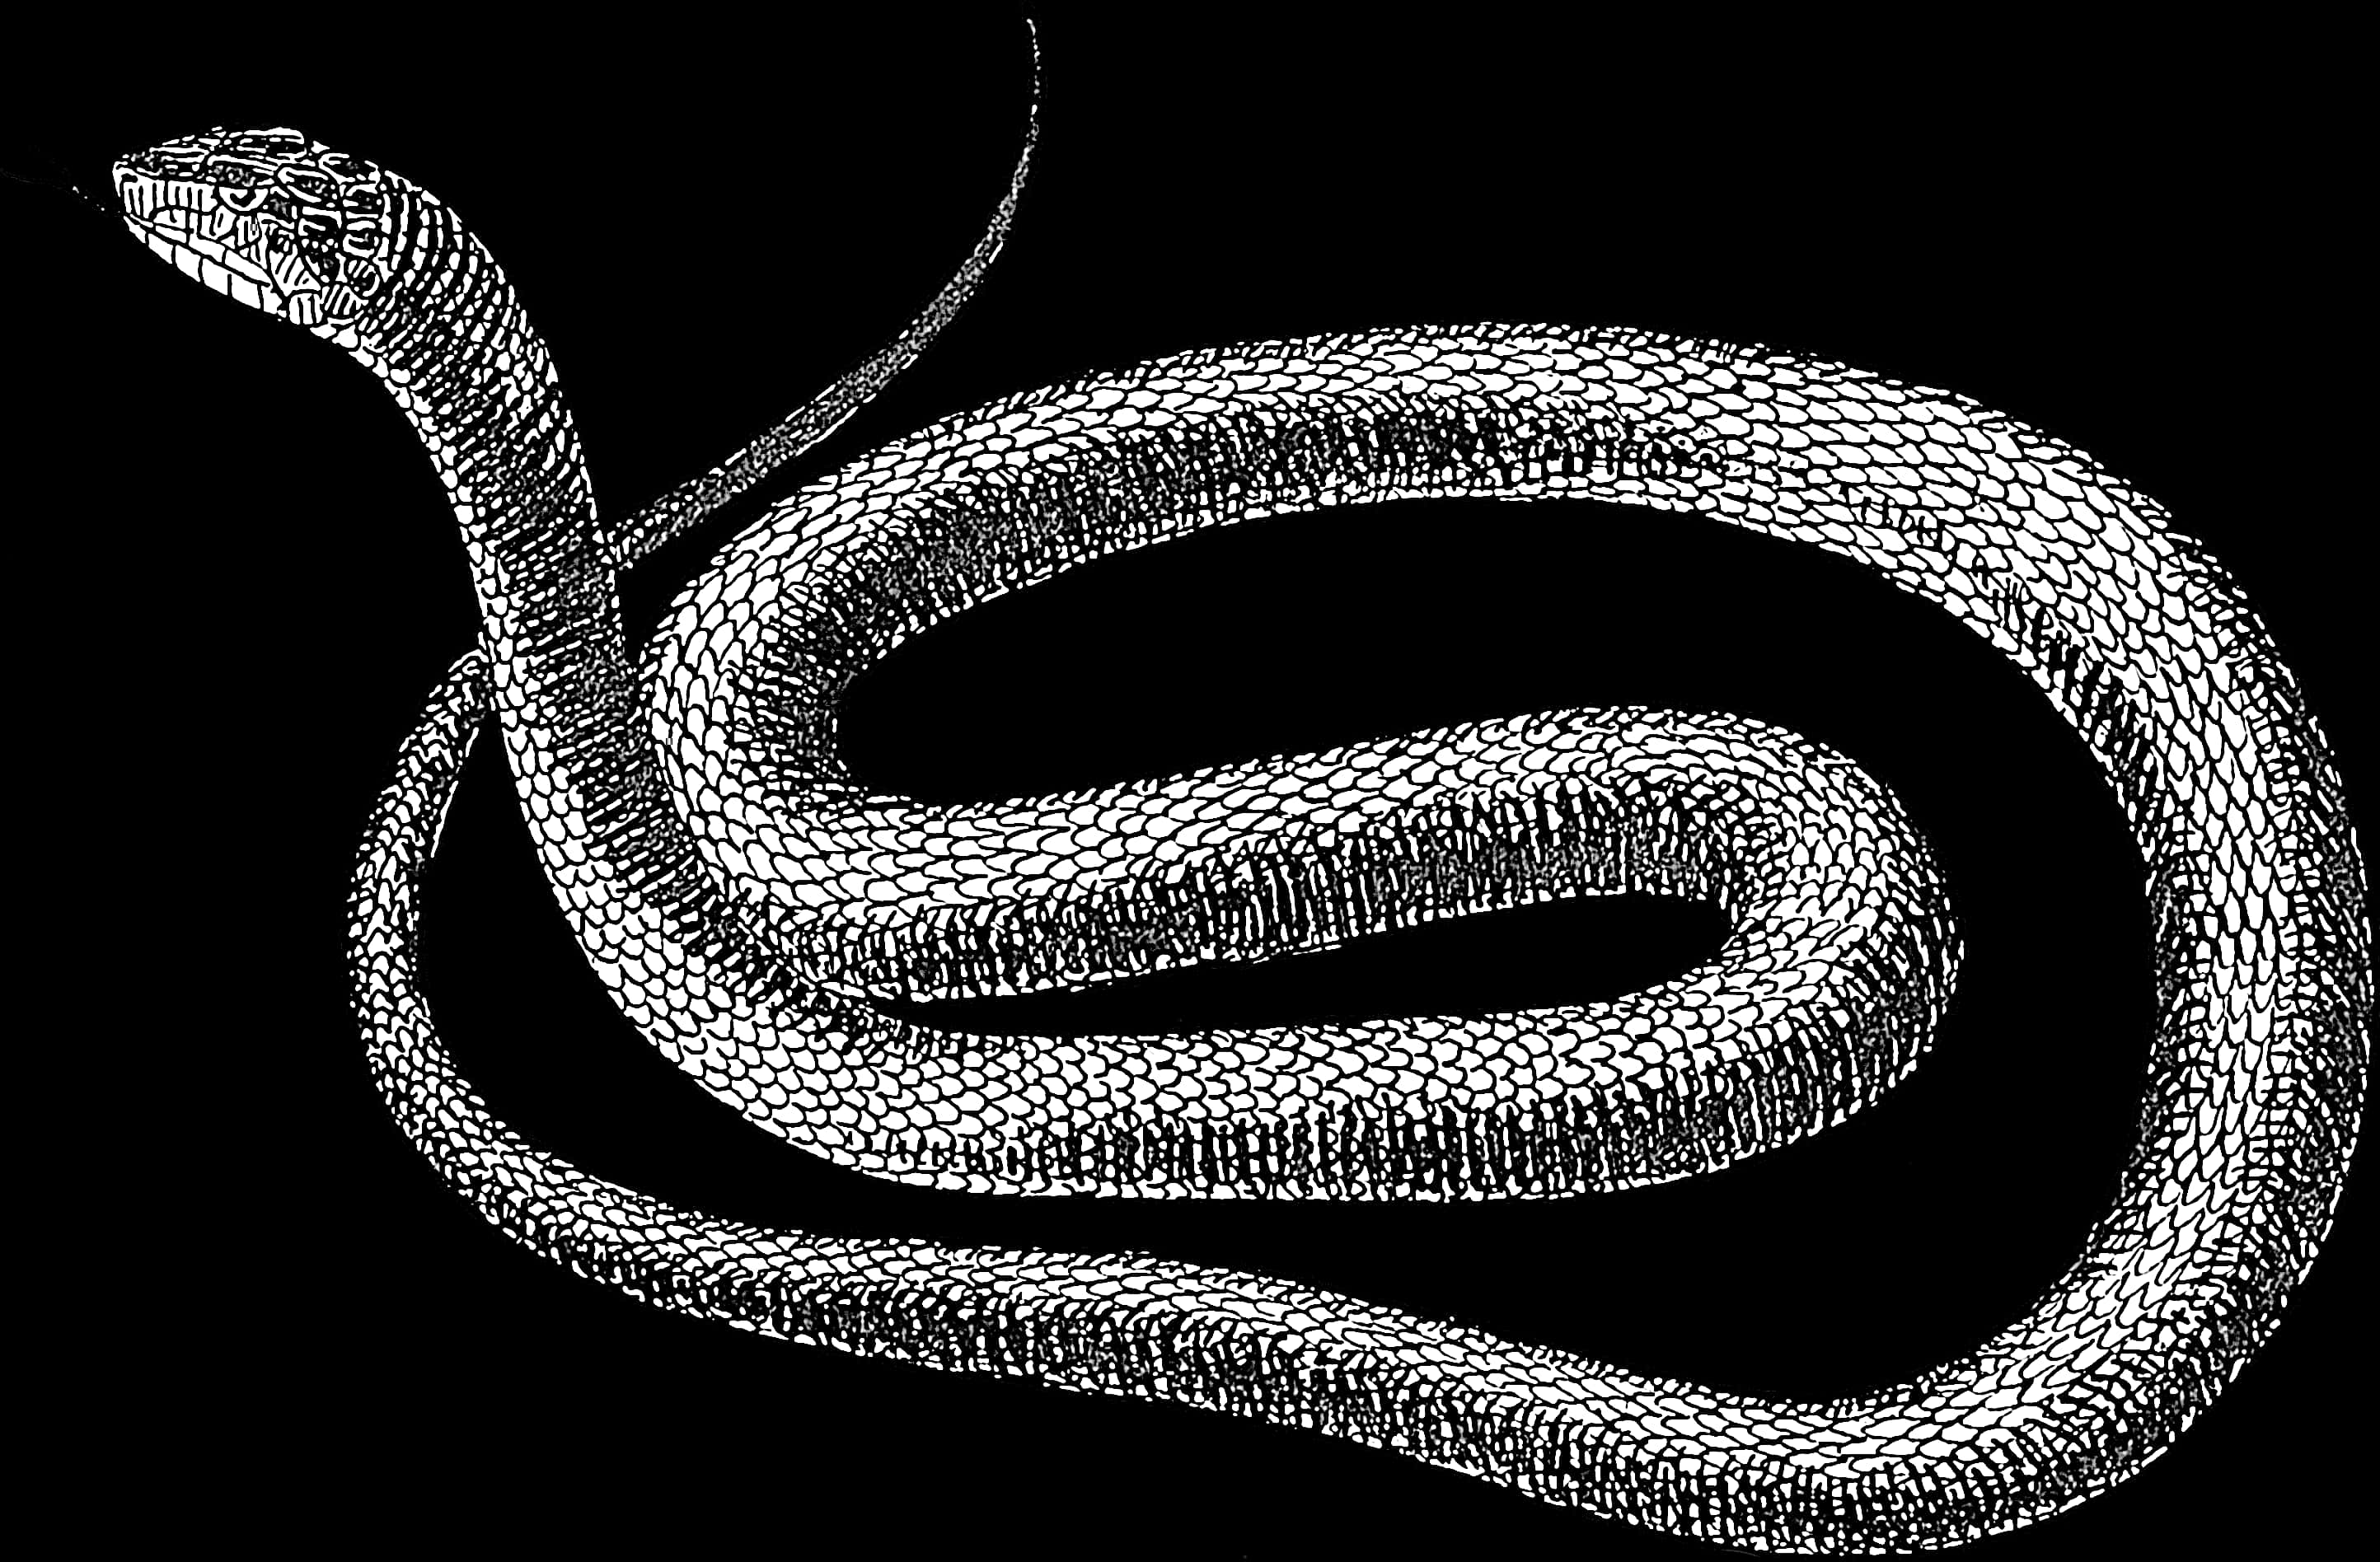 Blackand White Snake Illustration PNG image